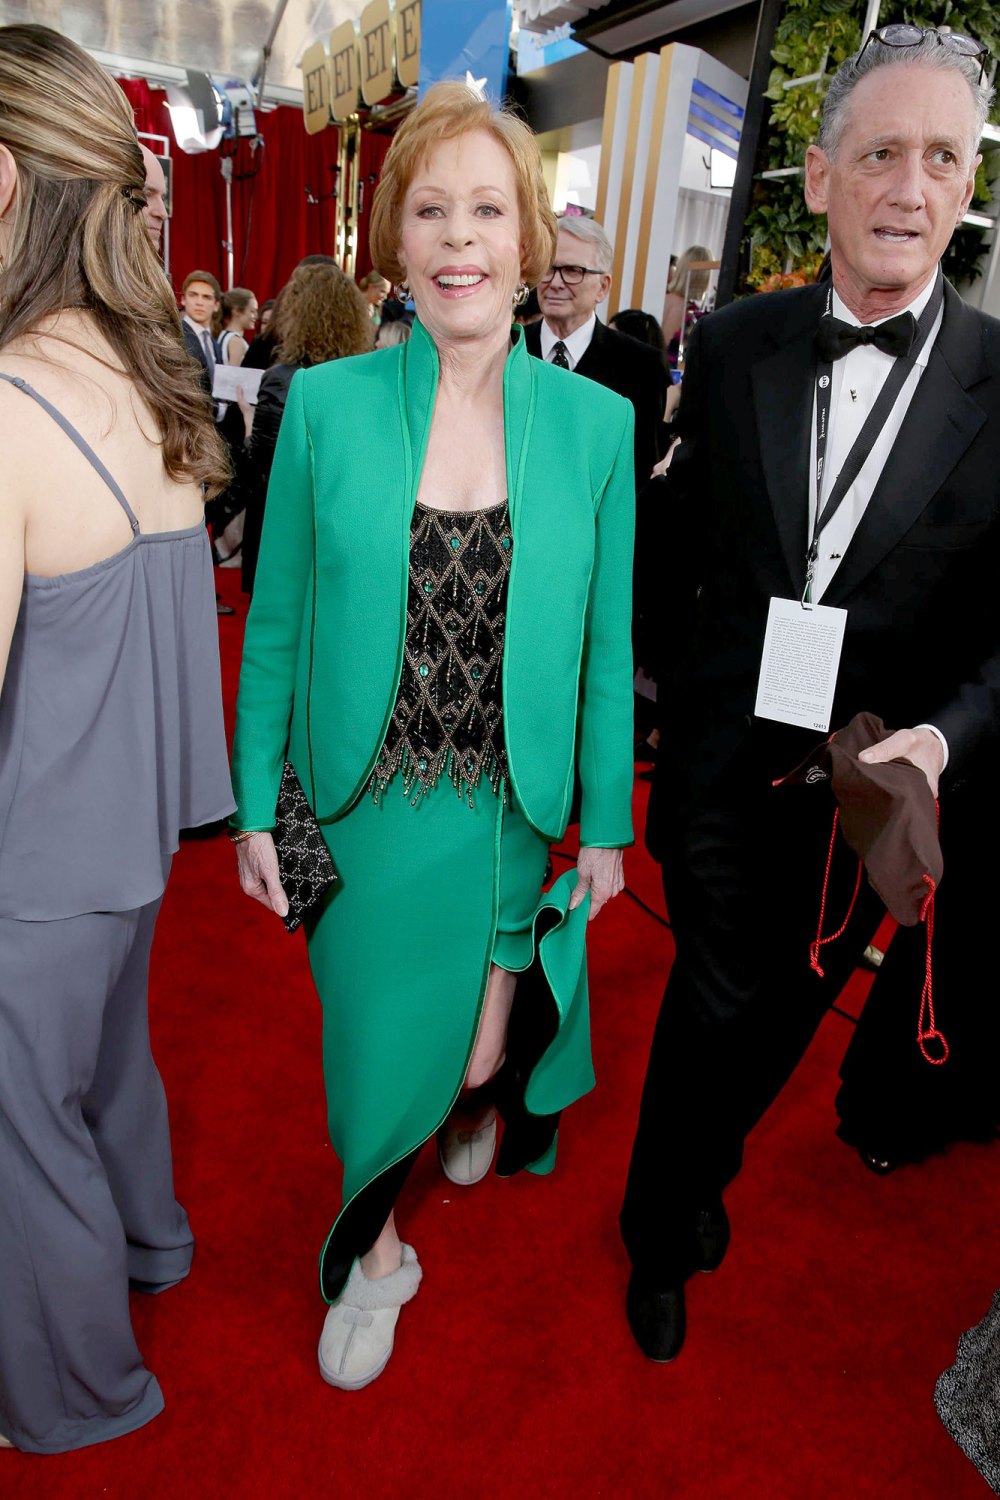 Carol Burnett Wore Slippers to the SAG Awards 2016 Red Carpet Like a Boss: Pics